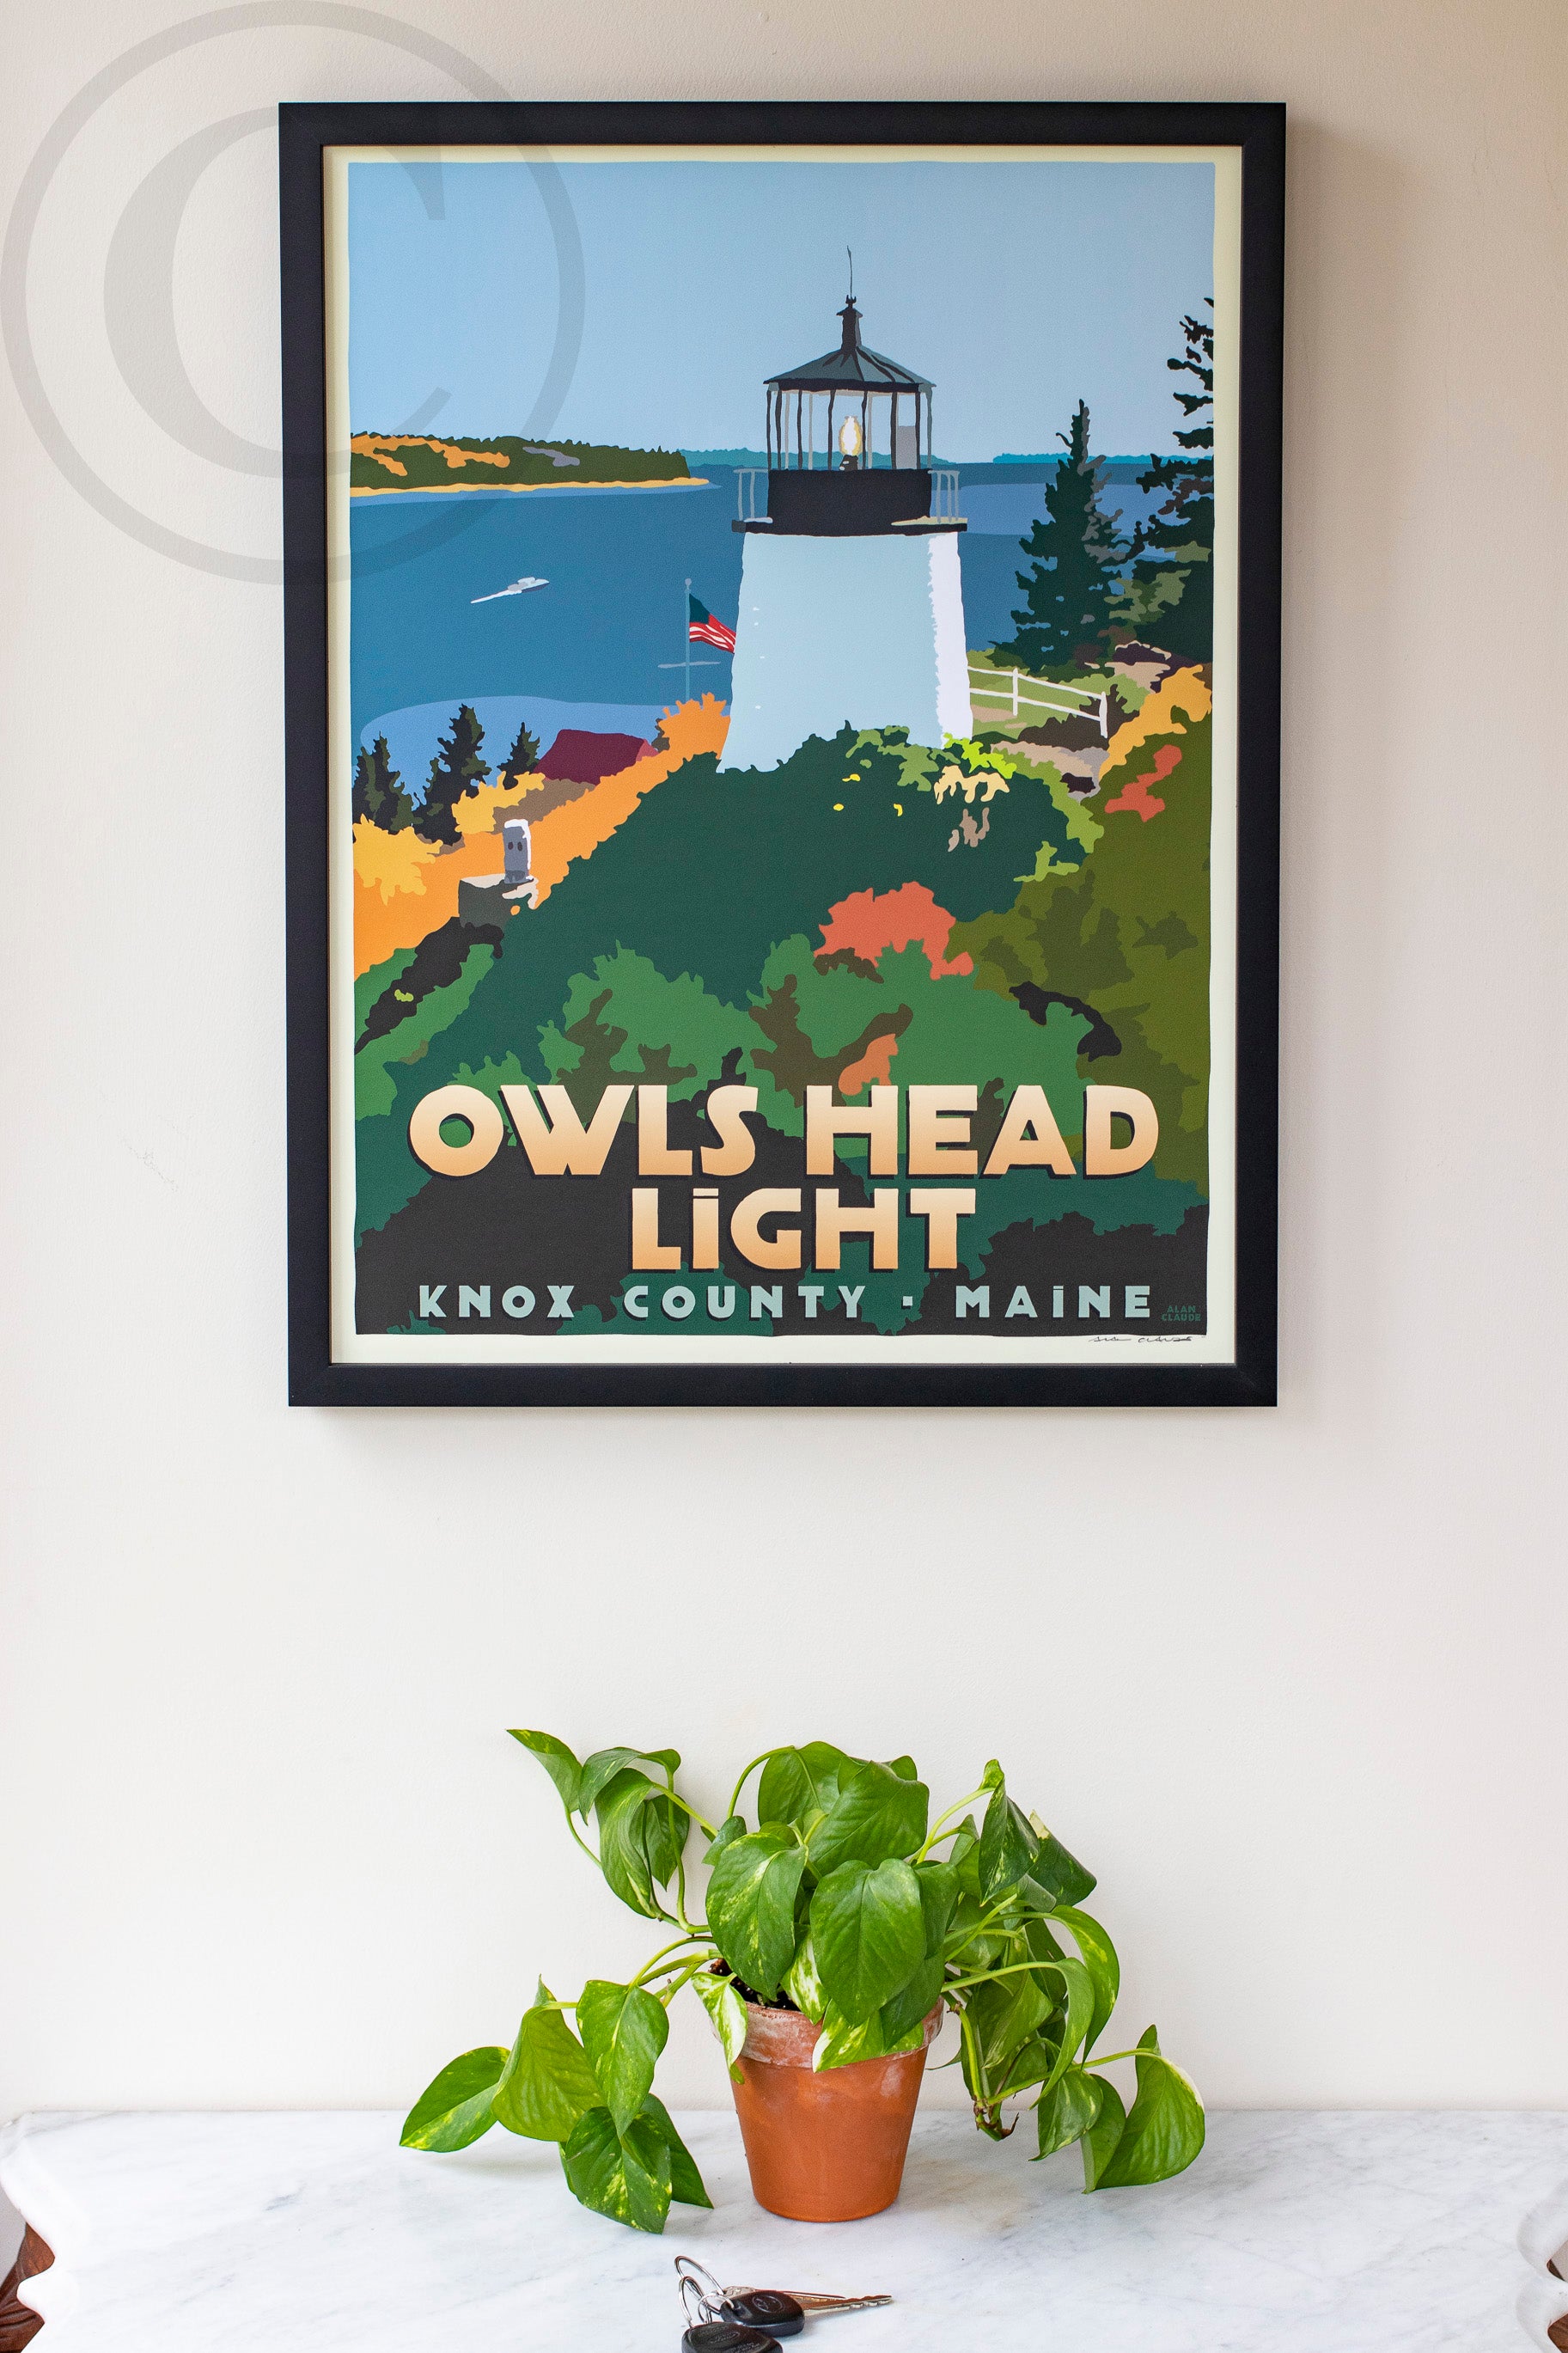 Above Owls Head Light Art Print 18" x 24" Framed Travel Poster By Alan Claude - Maine